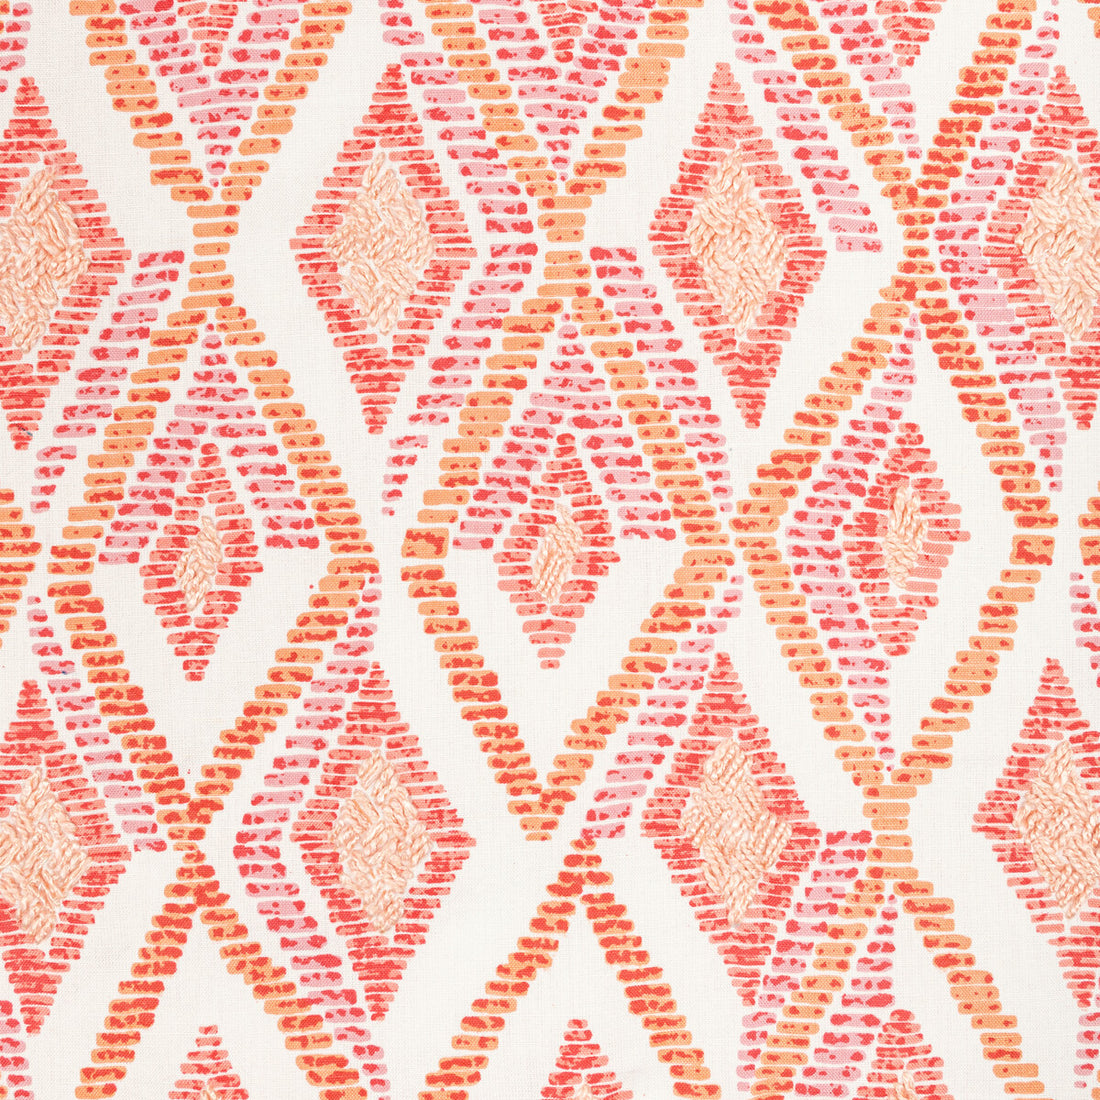 Antiparos fabric in sherbert color - pattern ANTIPAROS.712.0 - by Kravet Design in the Nadia Watts Gem collection